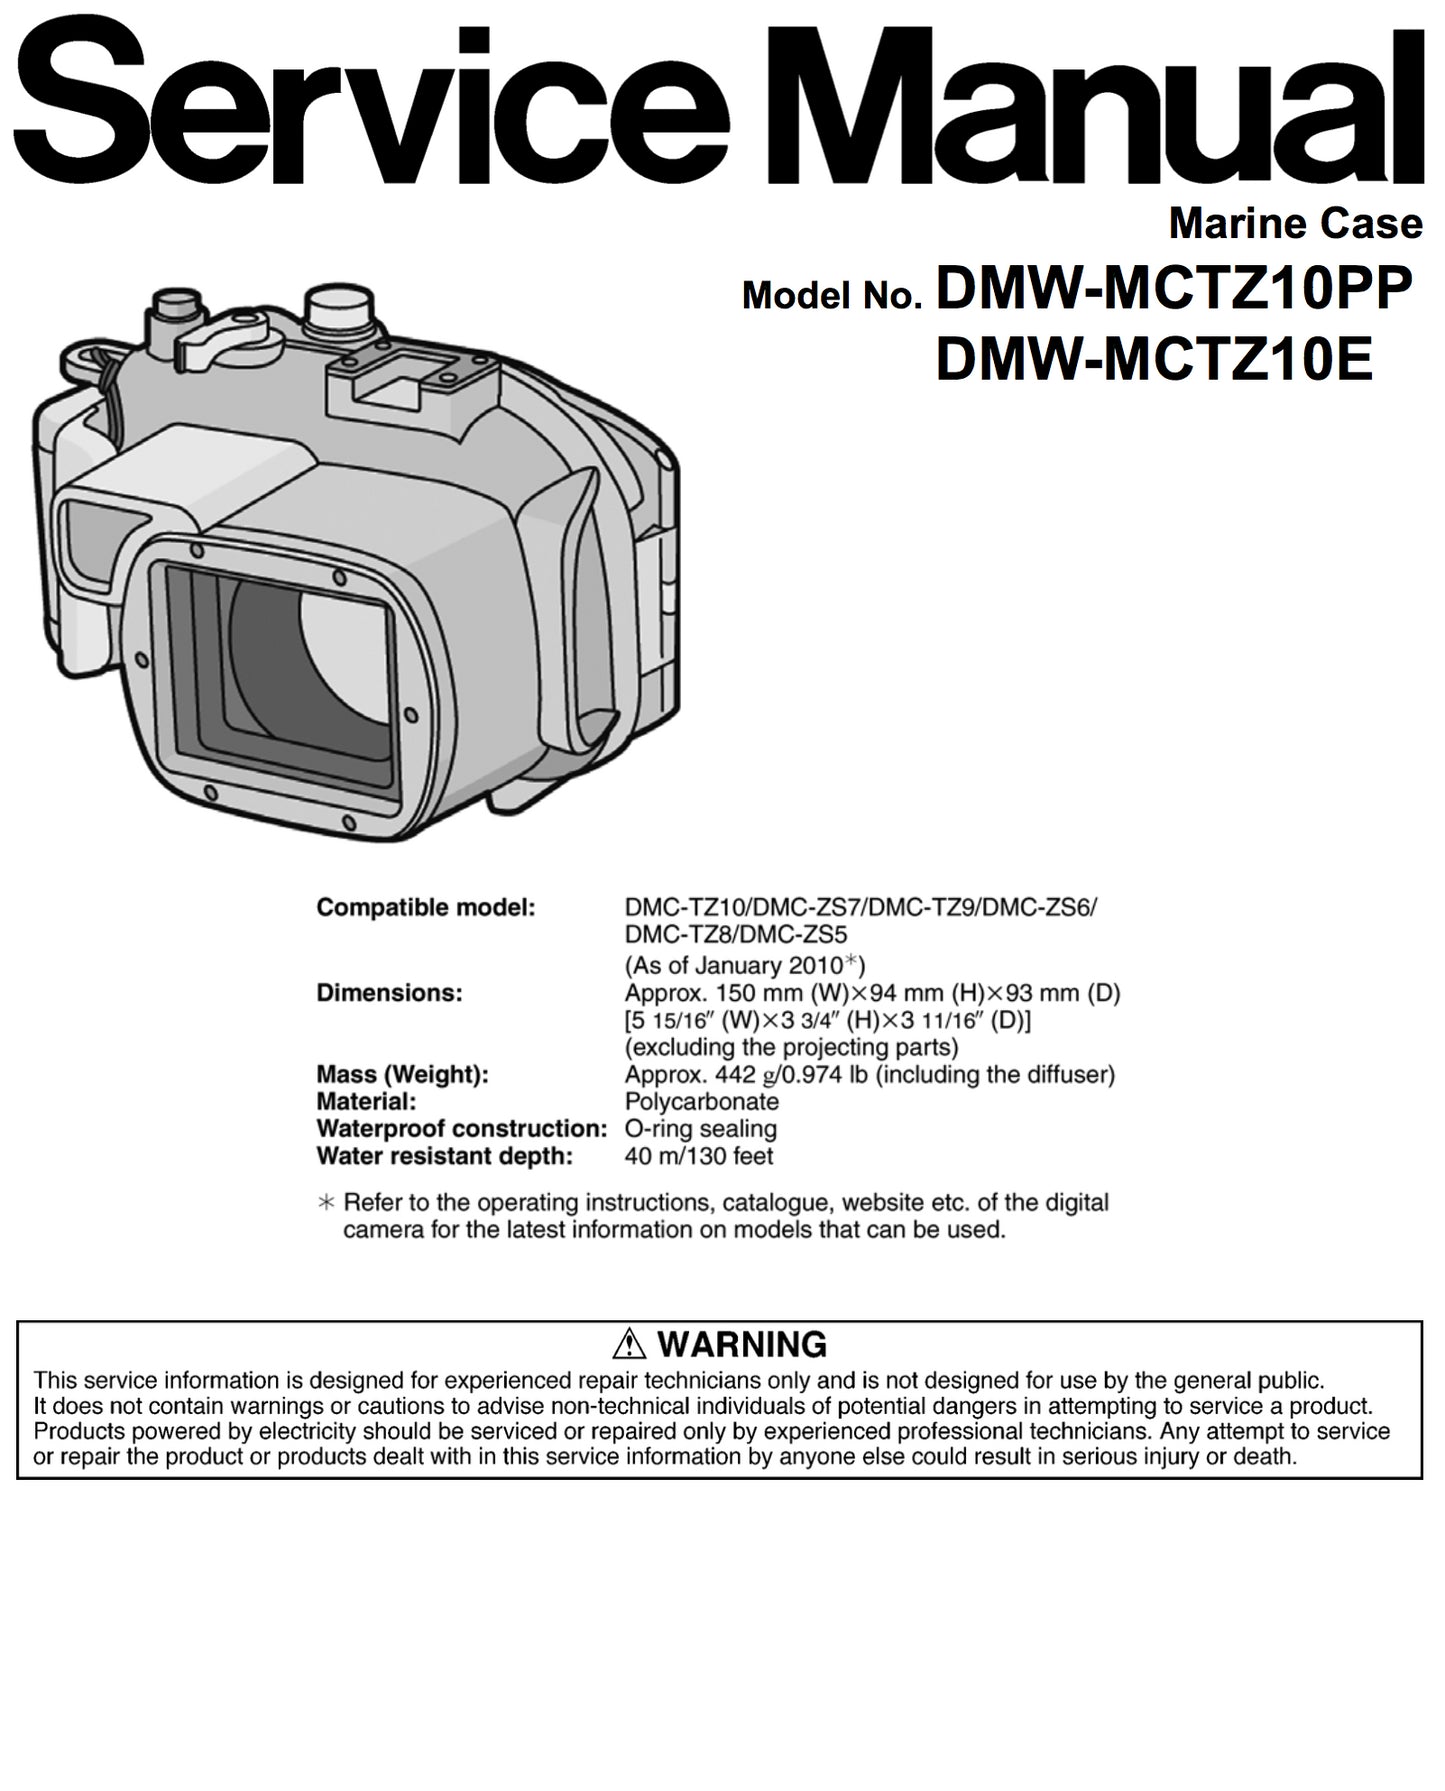 Panasonic DMW-MCTZ10E DMW-MCTZ10PP Service Manual Complete